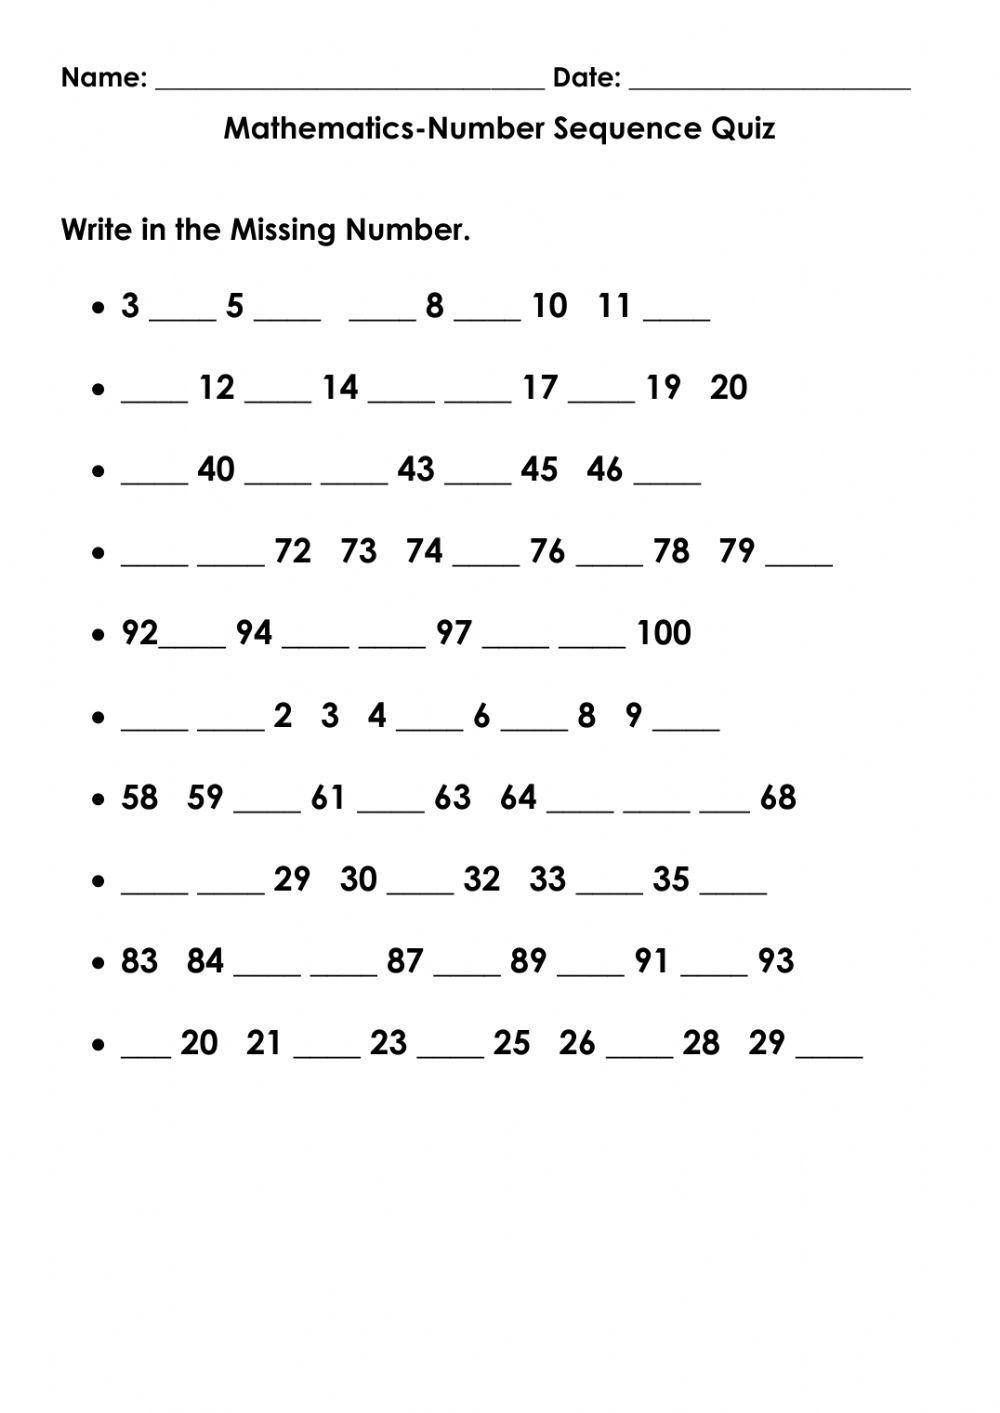 Mathematics Number Sequence quiz